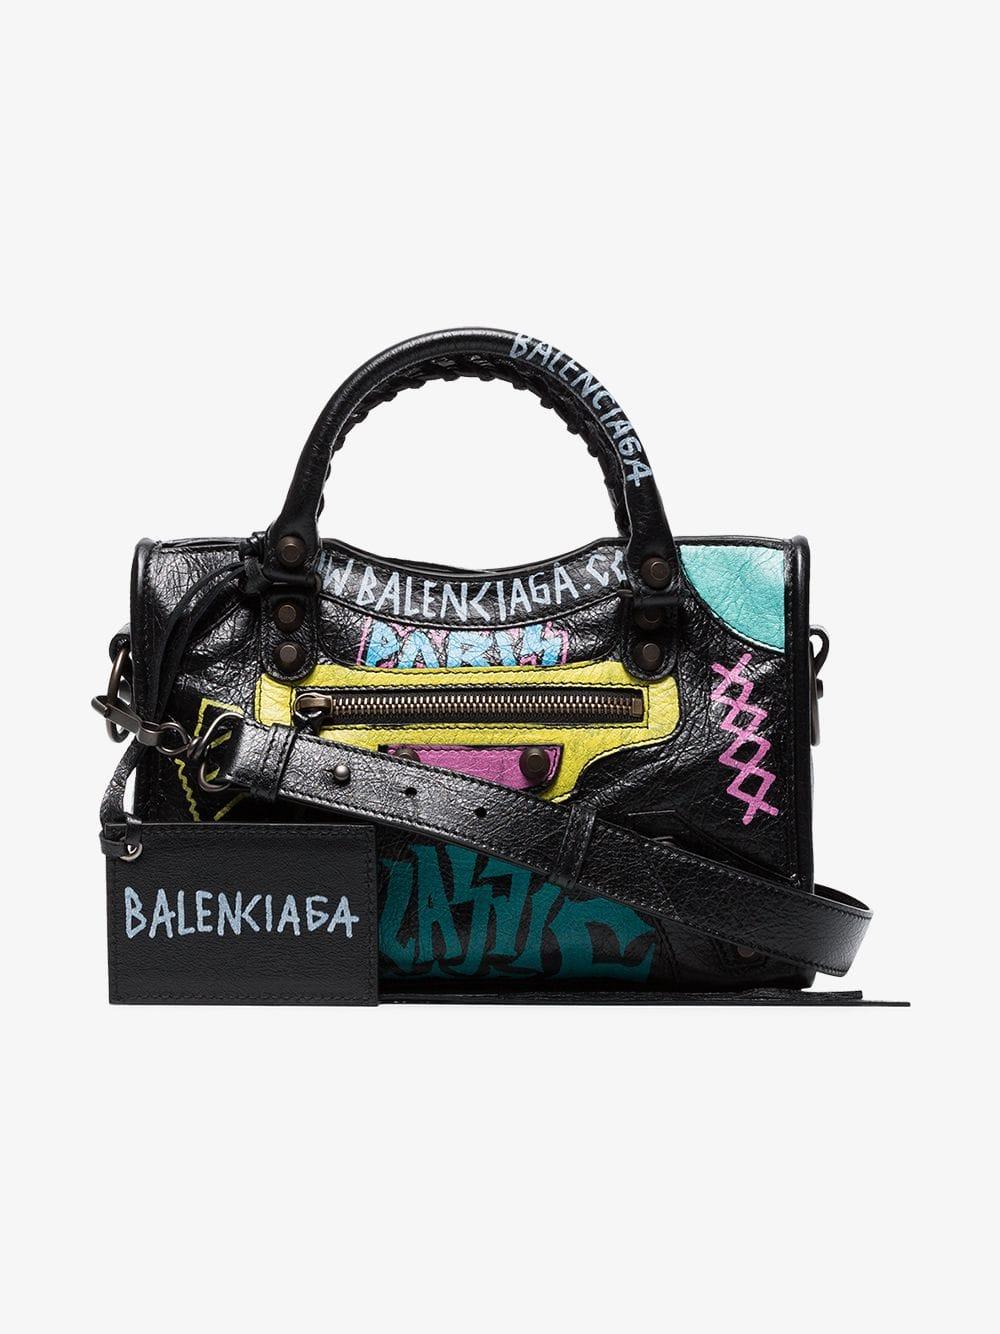 Uboxing Review on BALENCIAGA Mini City Graffiti Bag Black Multi city bag 